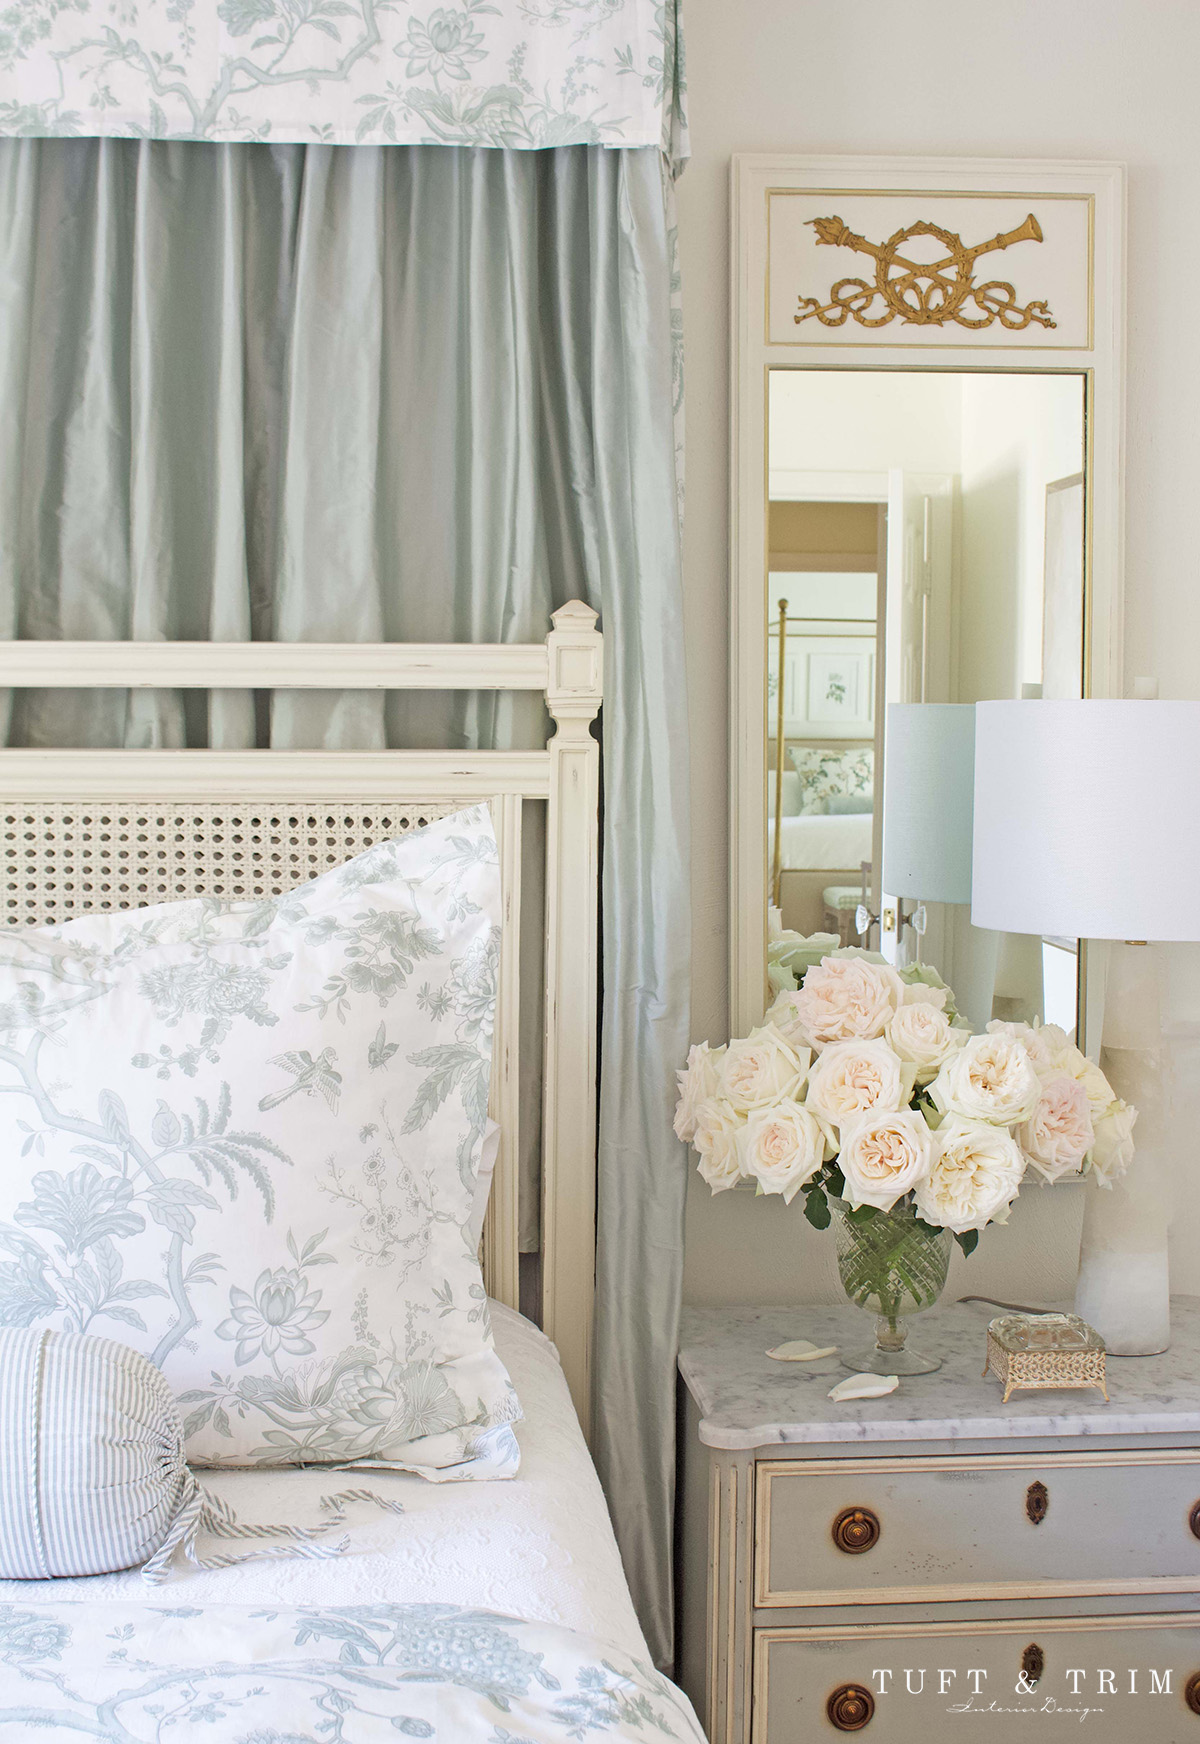 Romantic Bedroom with DIY Half Tester Canopy by Tuft & Trim Interior Design